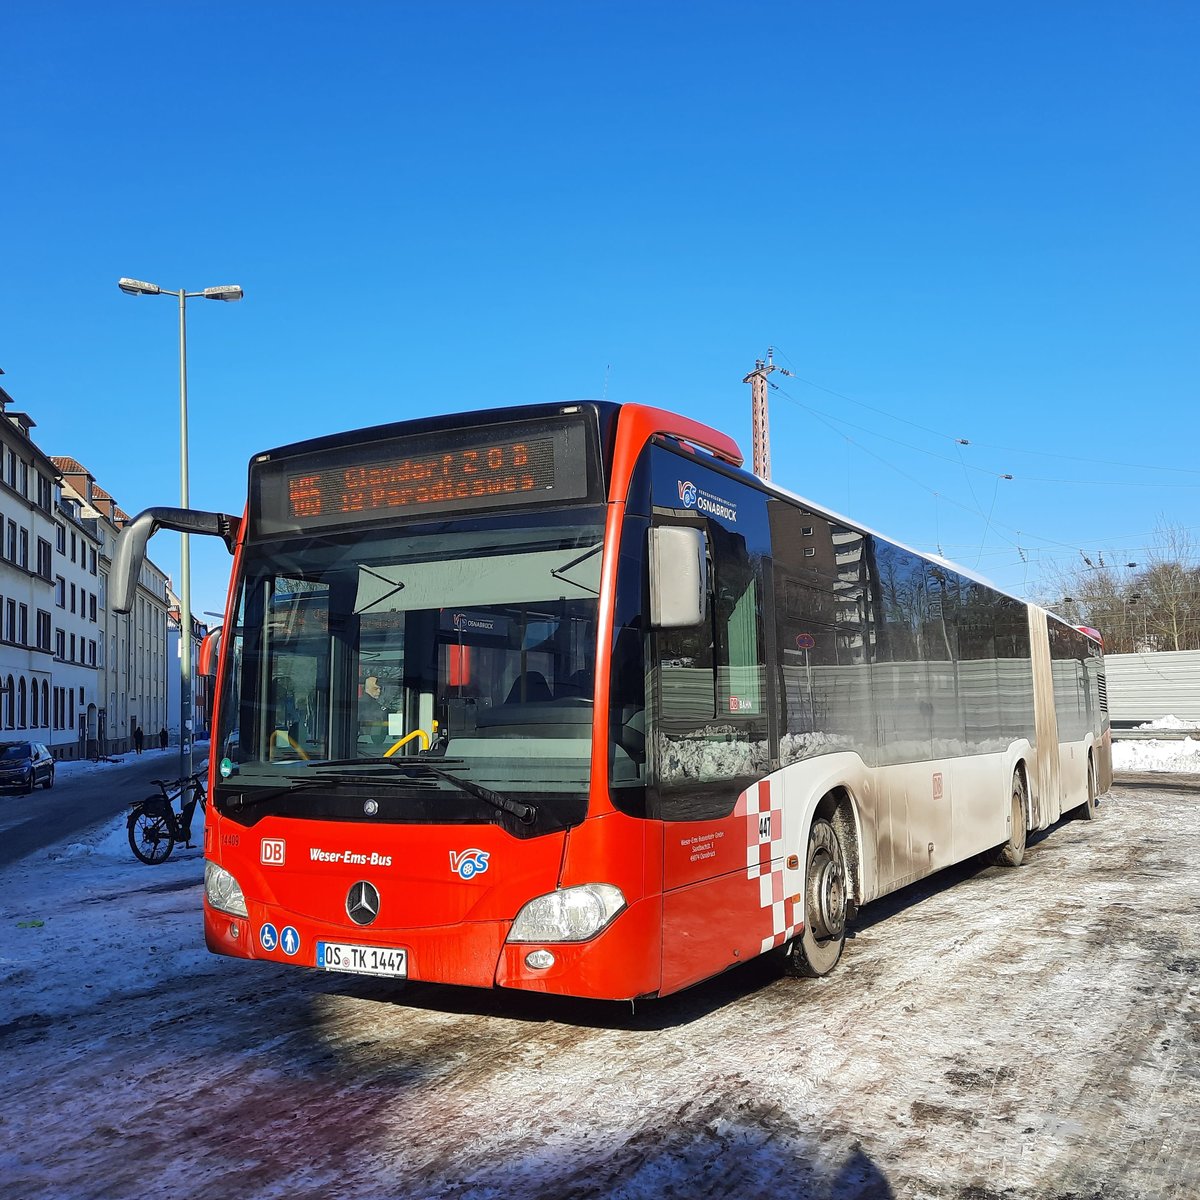 DB Weser Ems Bus
Aufgenommen am 13 Februar 2021
Osnabrück Hauptbahnhof
OS TK 1447